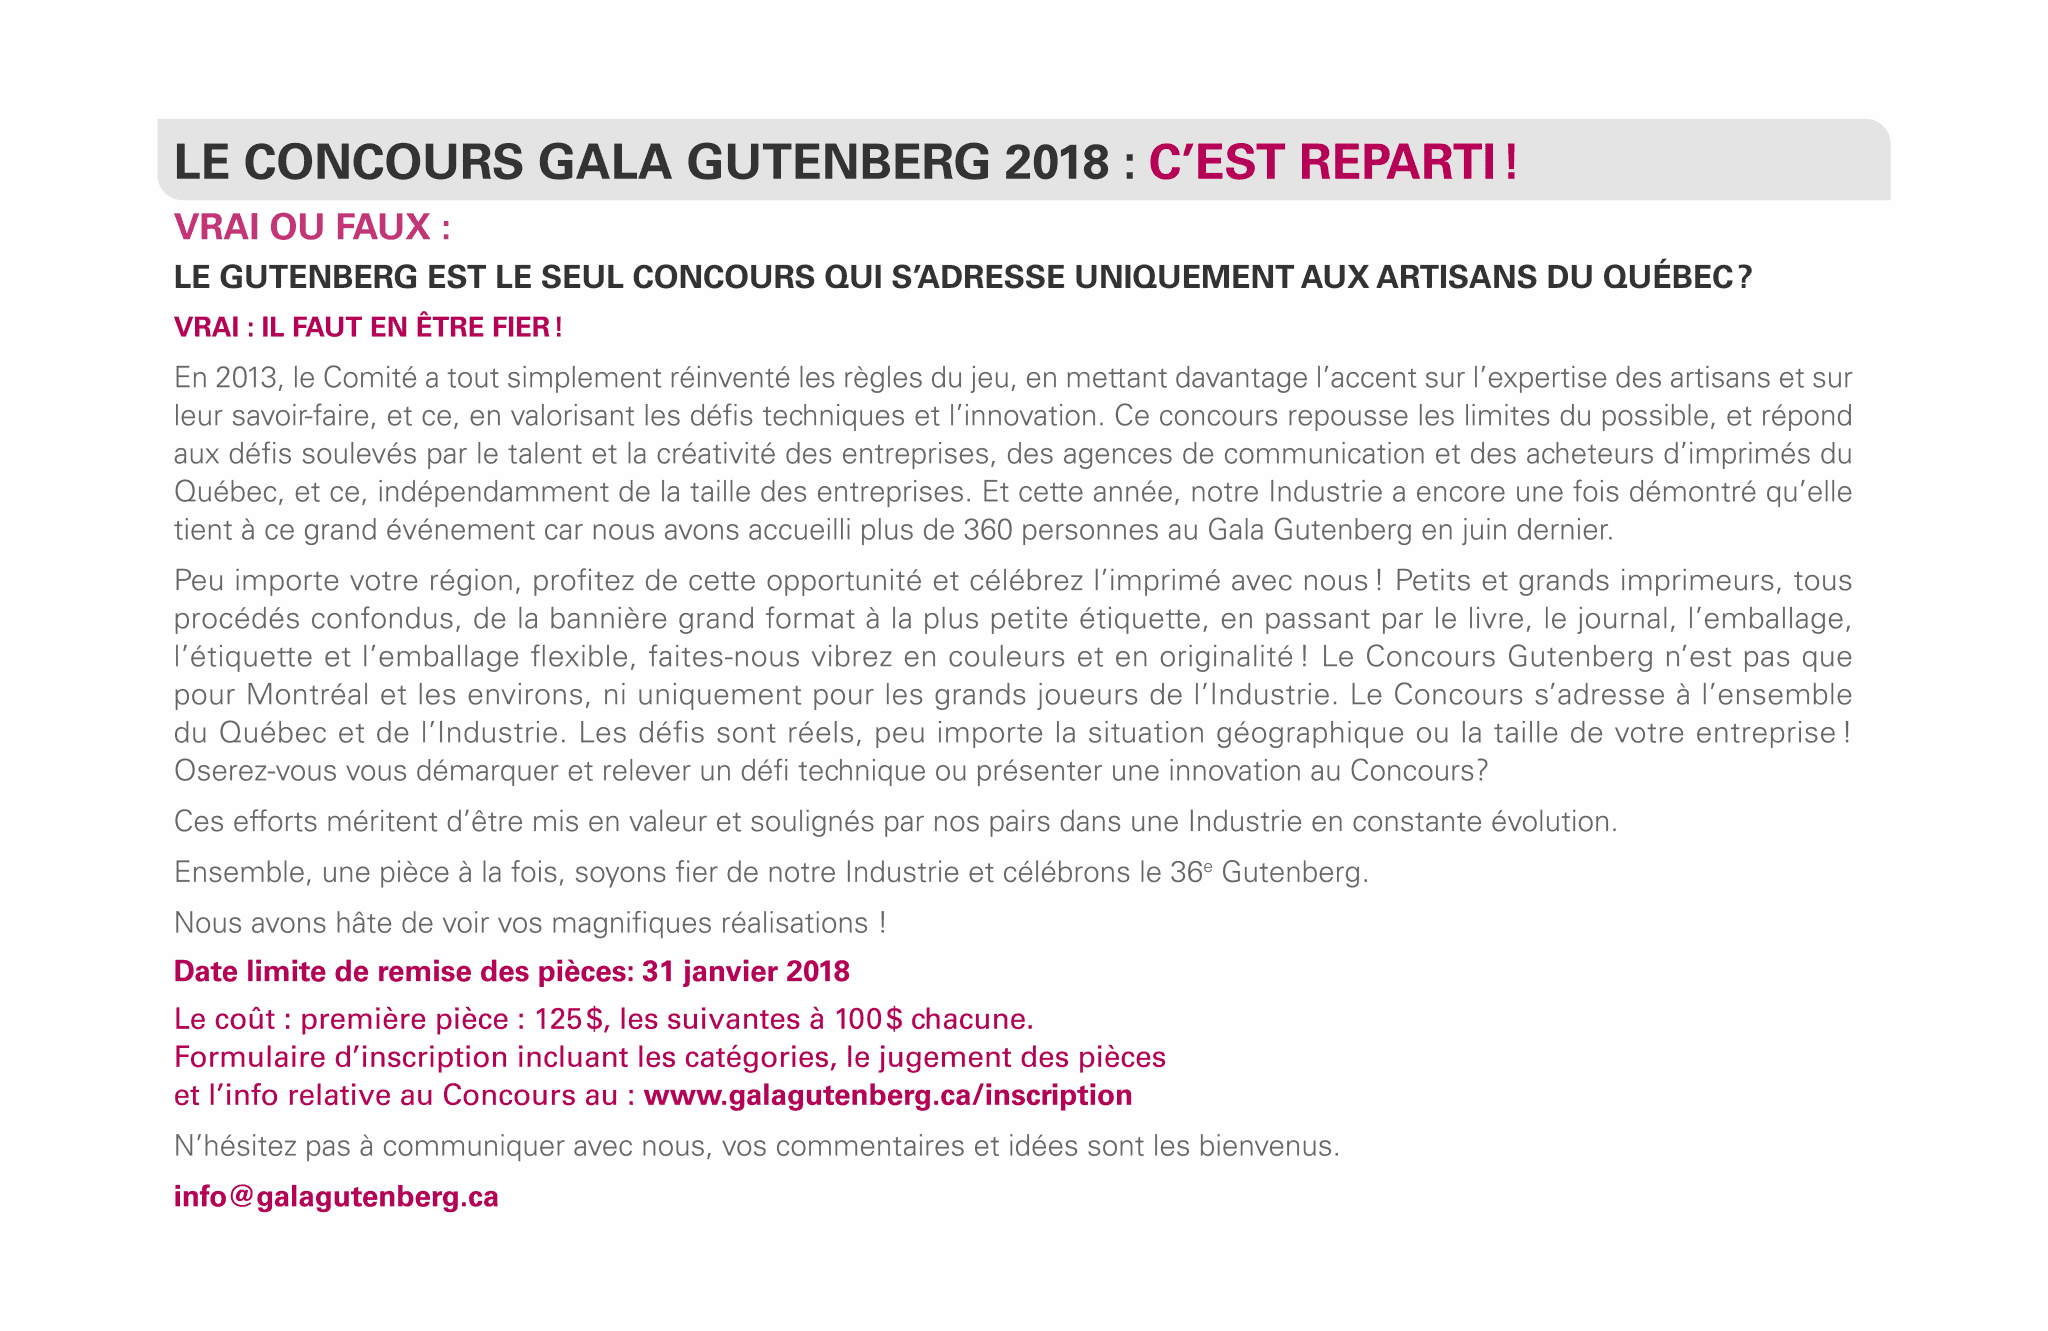 Le Concours Gala Gutenberg 2018 : c'est reparti!